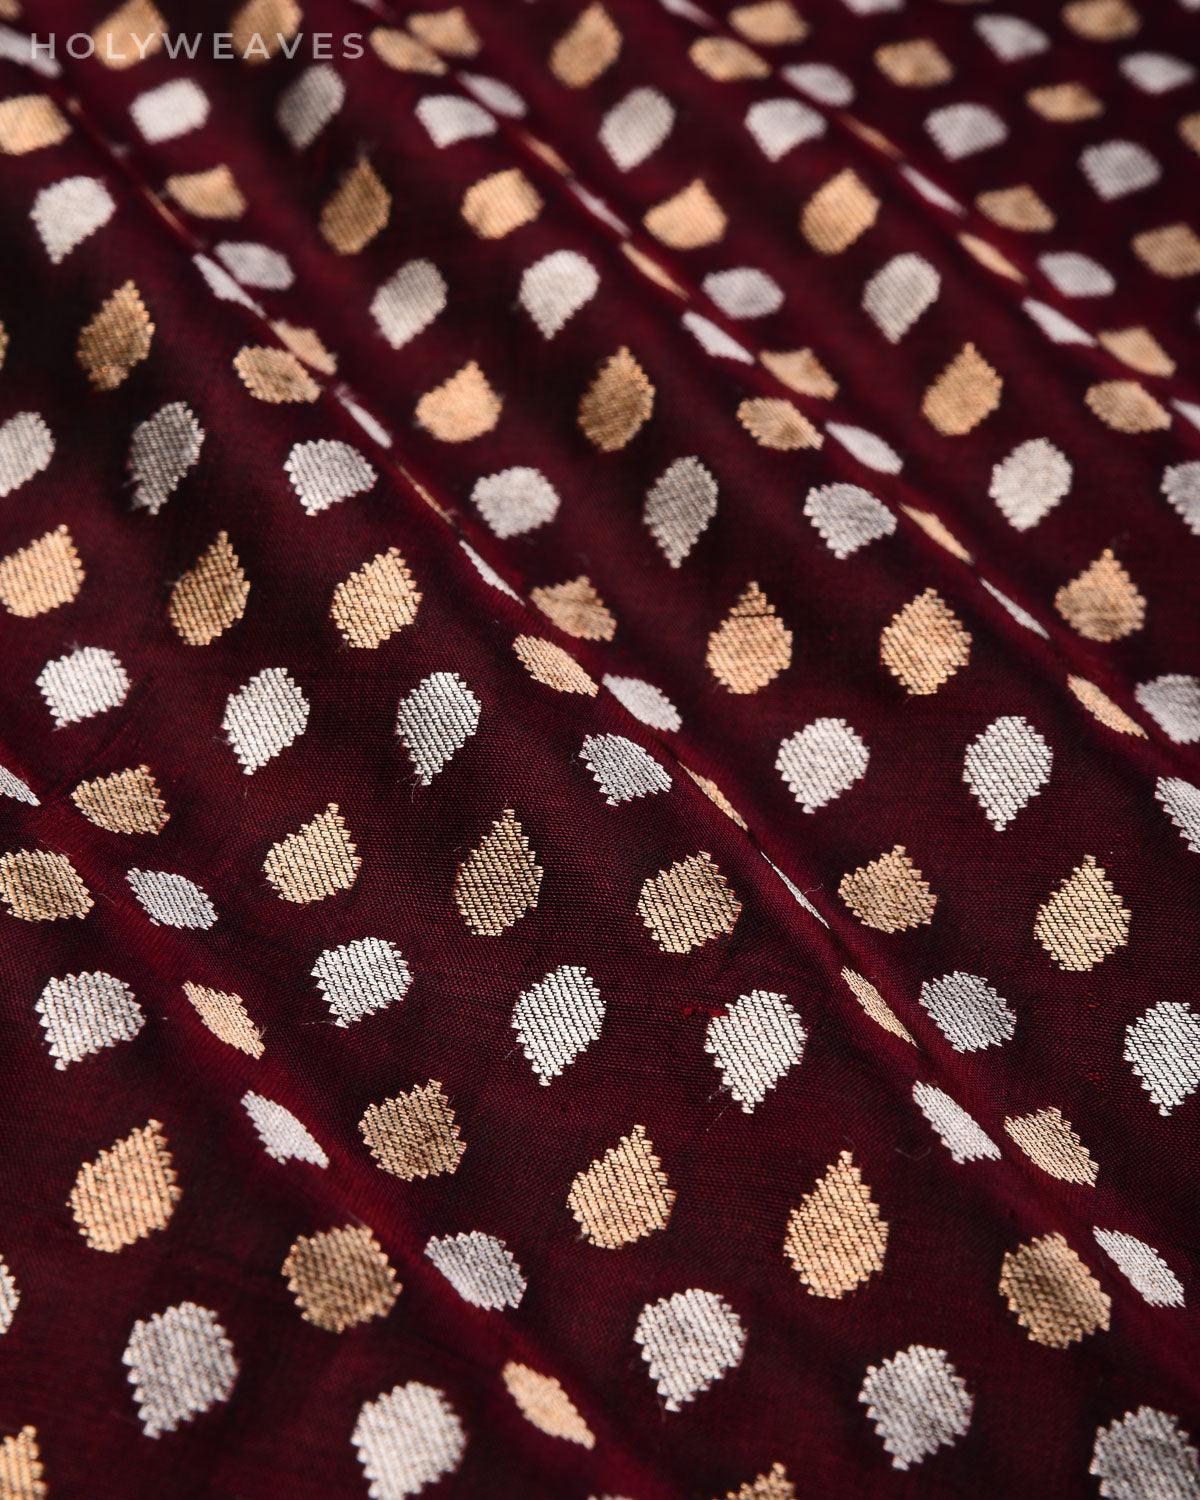 Mahogany Metallic Gold & Silver Raindrop Brocade Handwoven Pure Silk Pocket Square For Men - By HolyWeaves, Benares